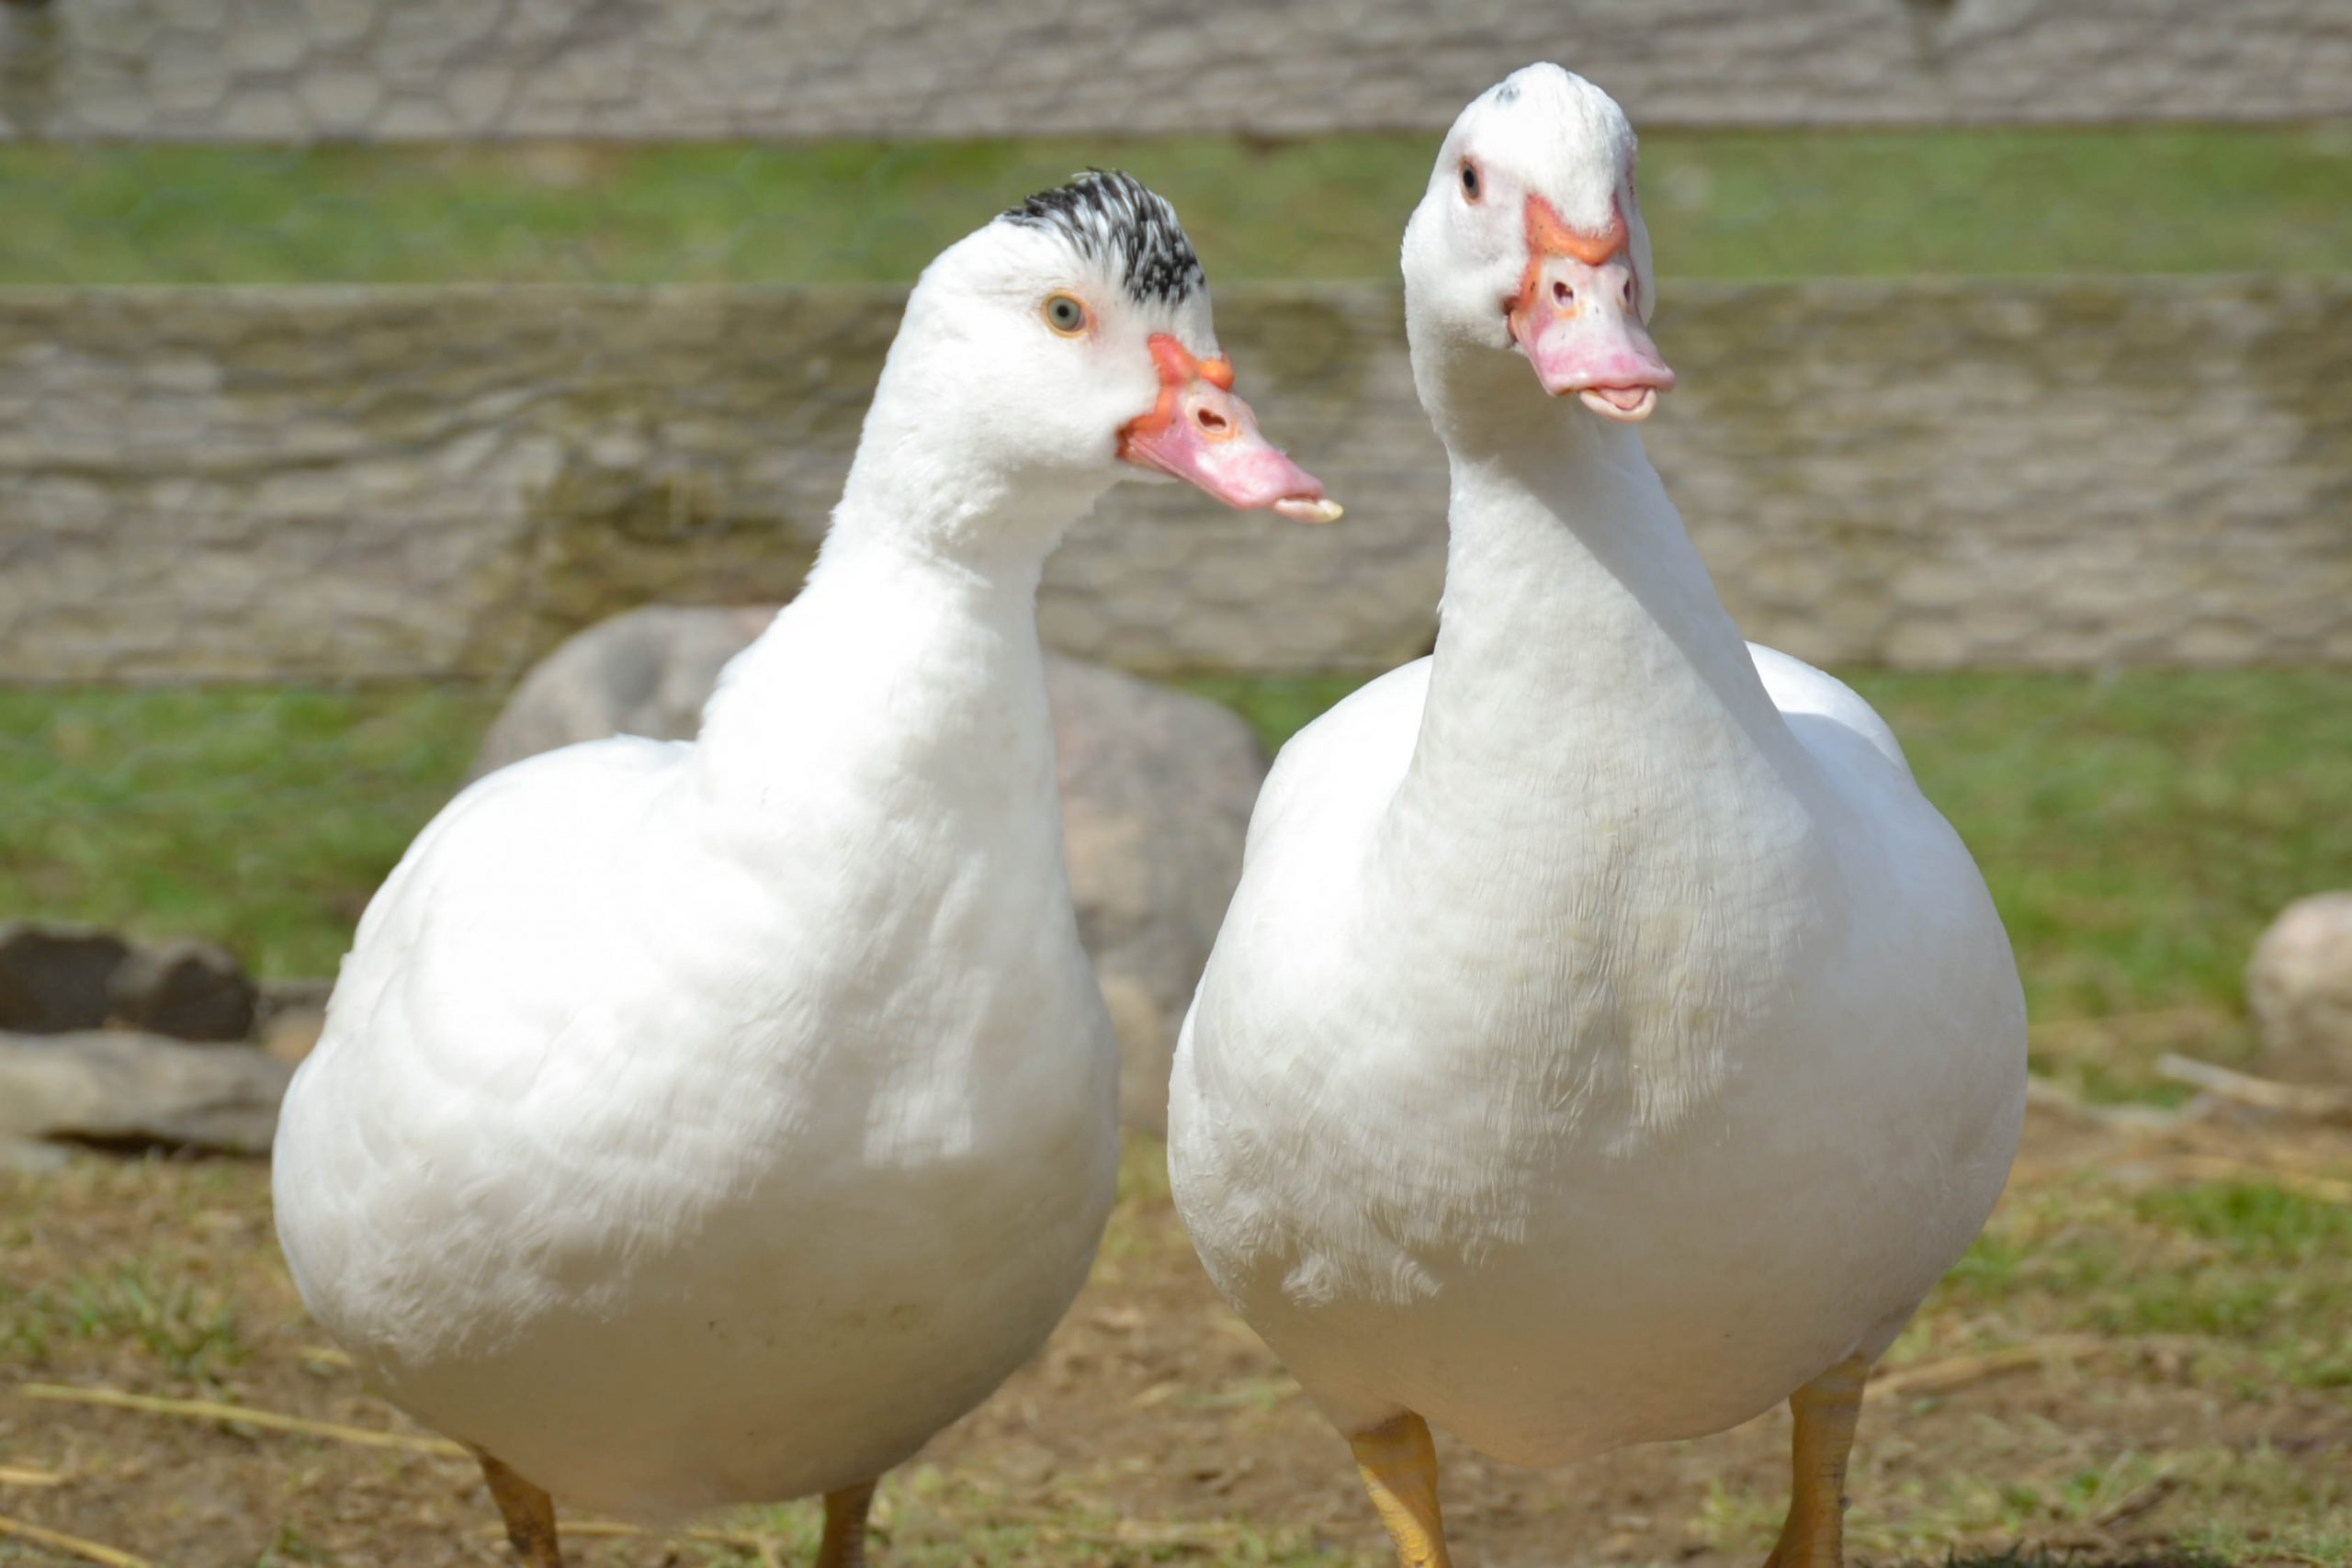 Amelie and Alicia ducks at Farm Sanctuary.